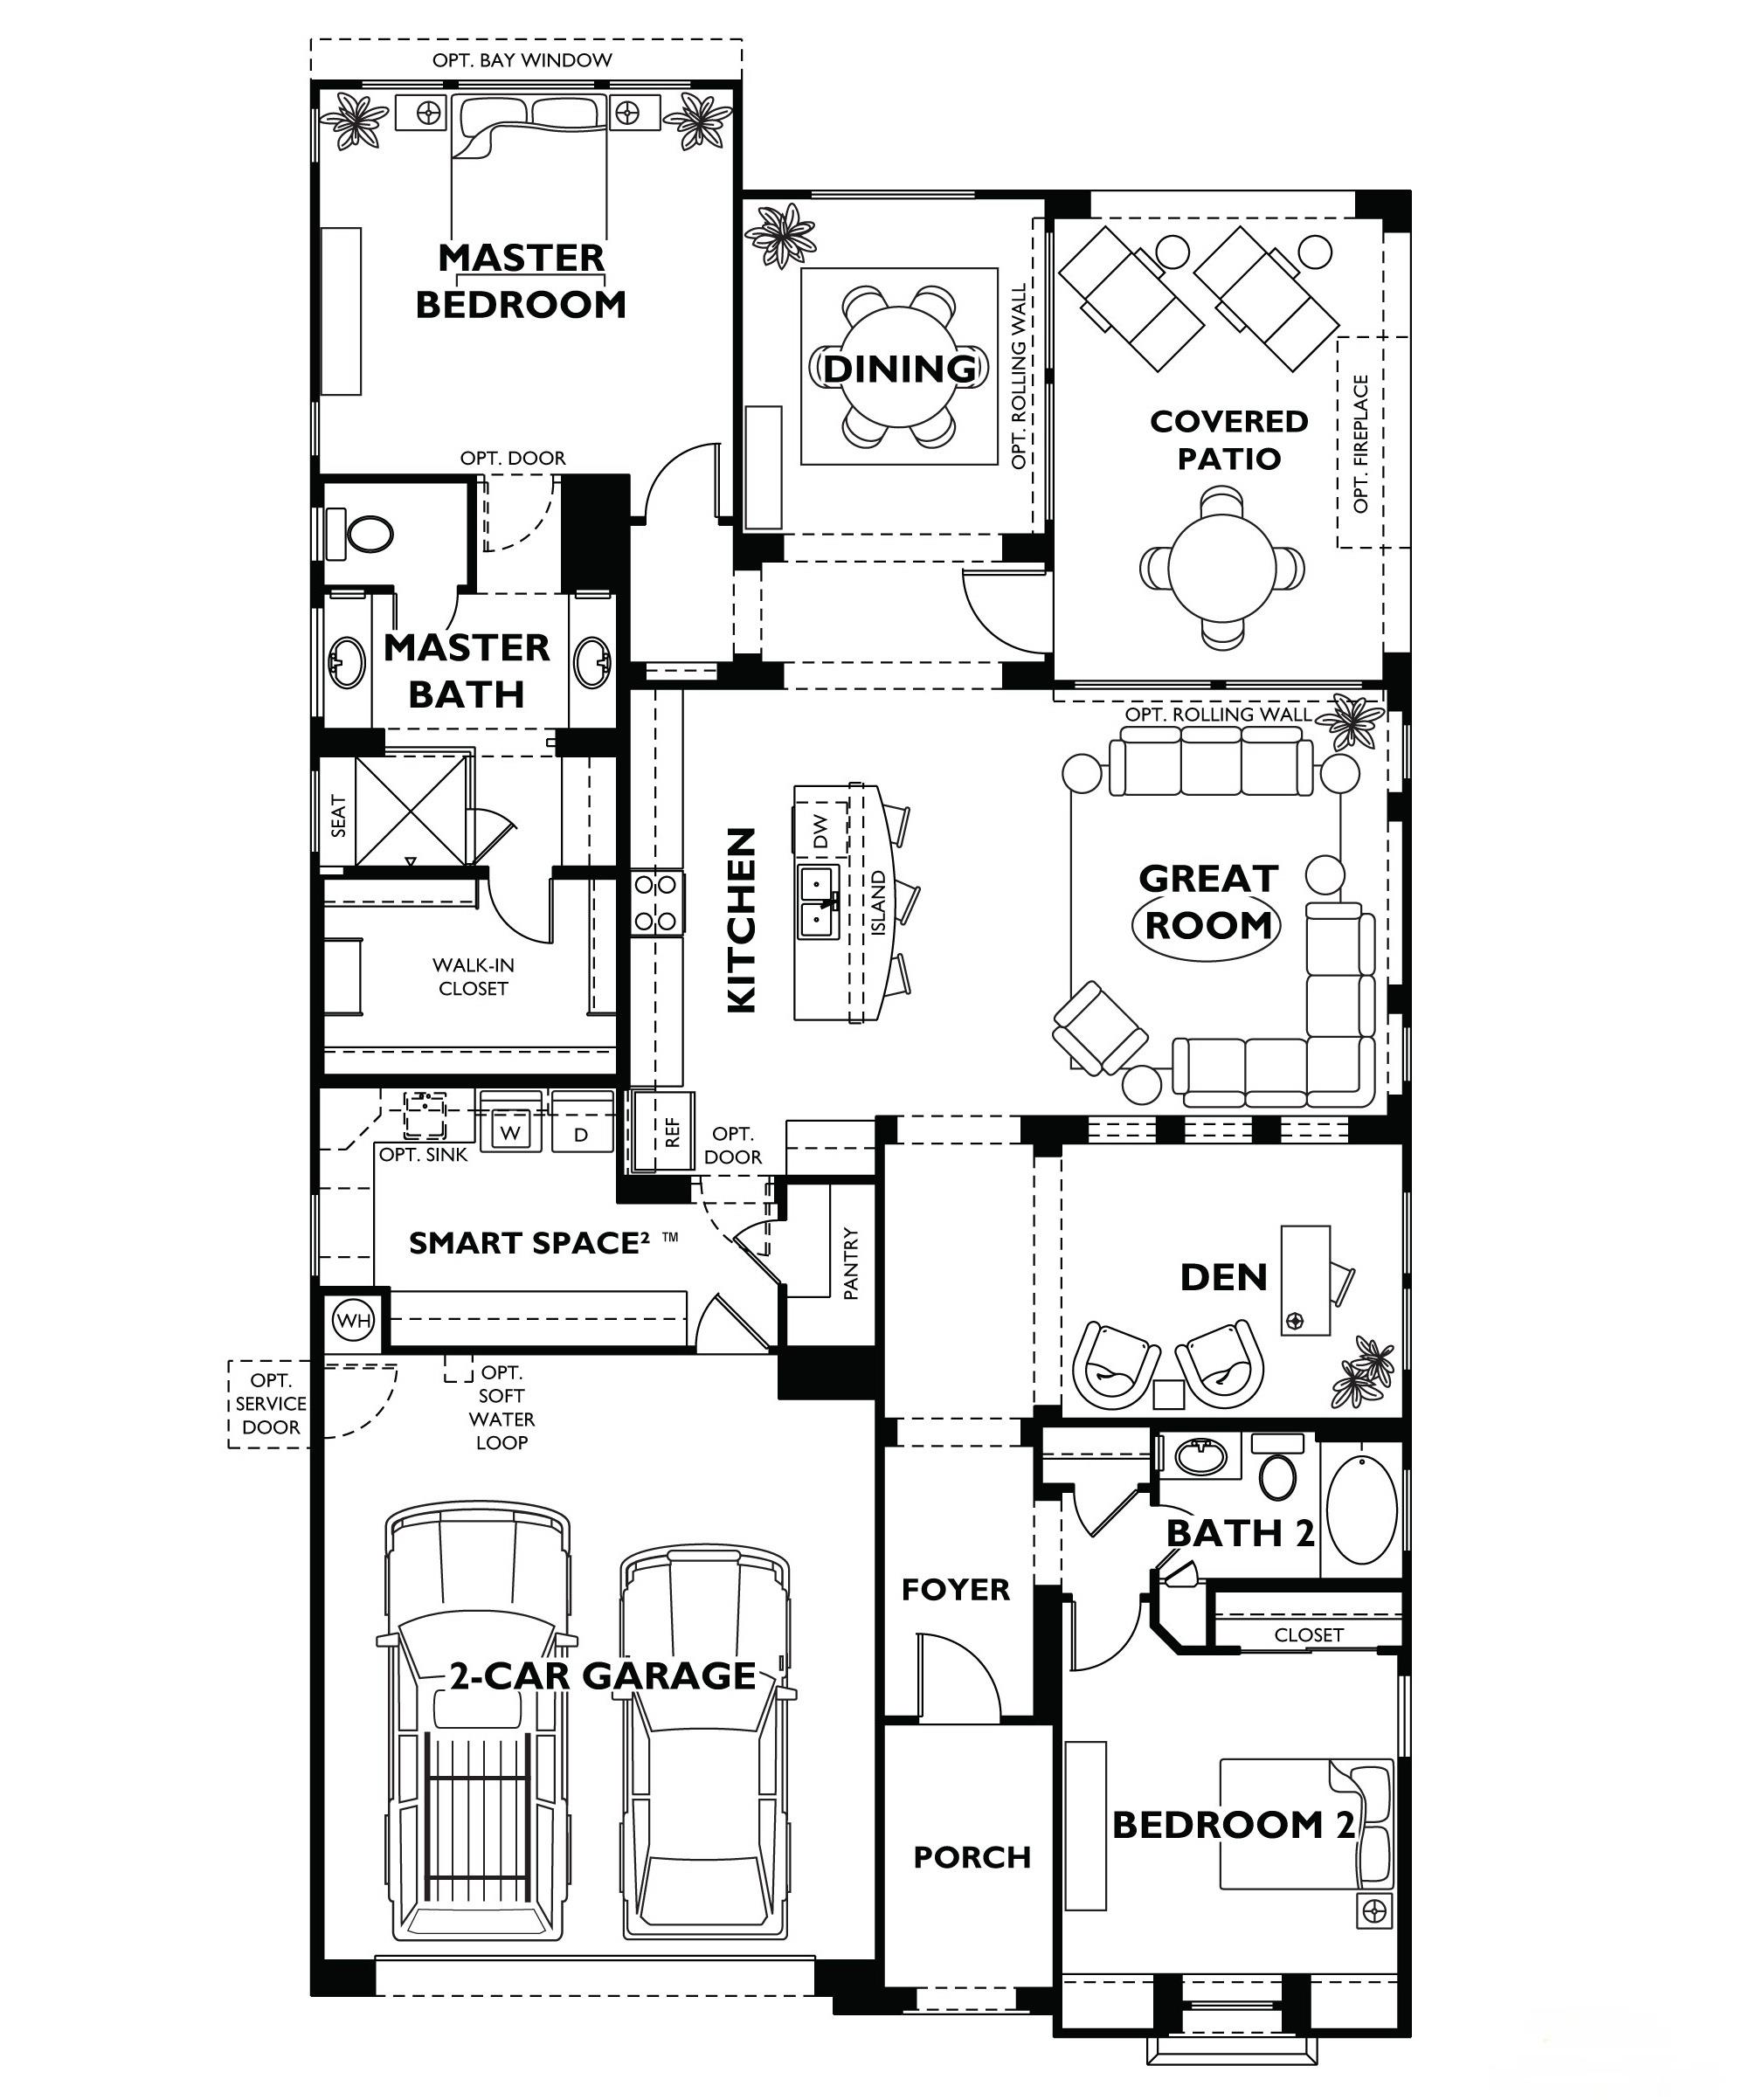 Trilogy at Vistancia Nice Floor Plan Model Home